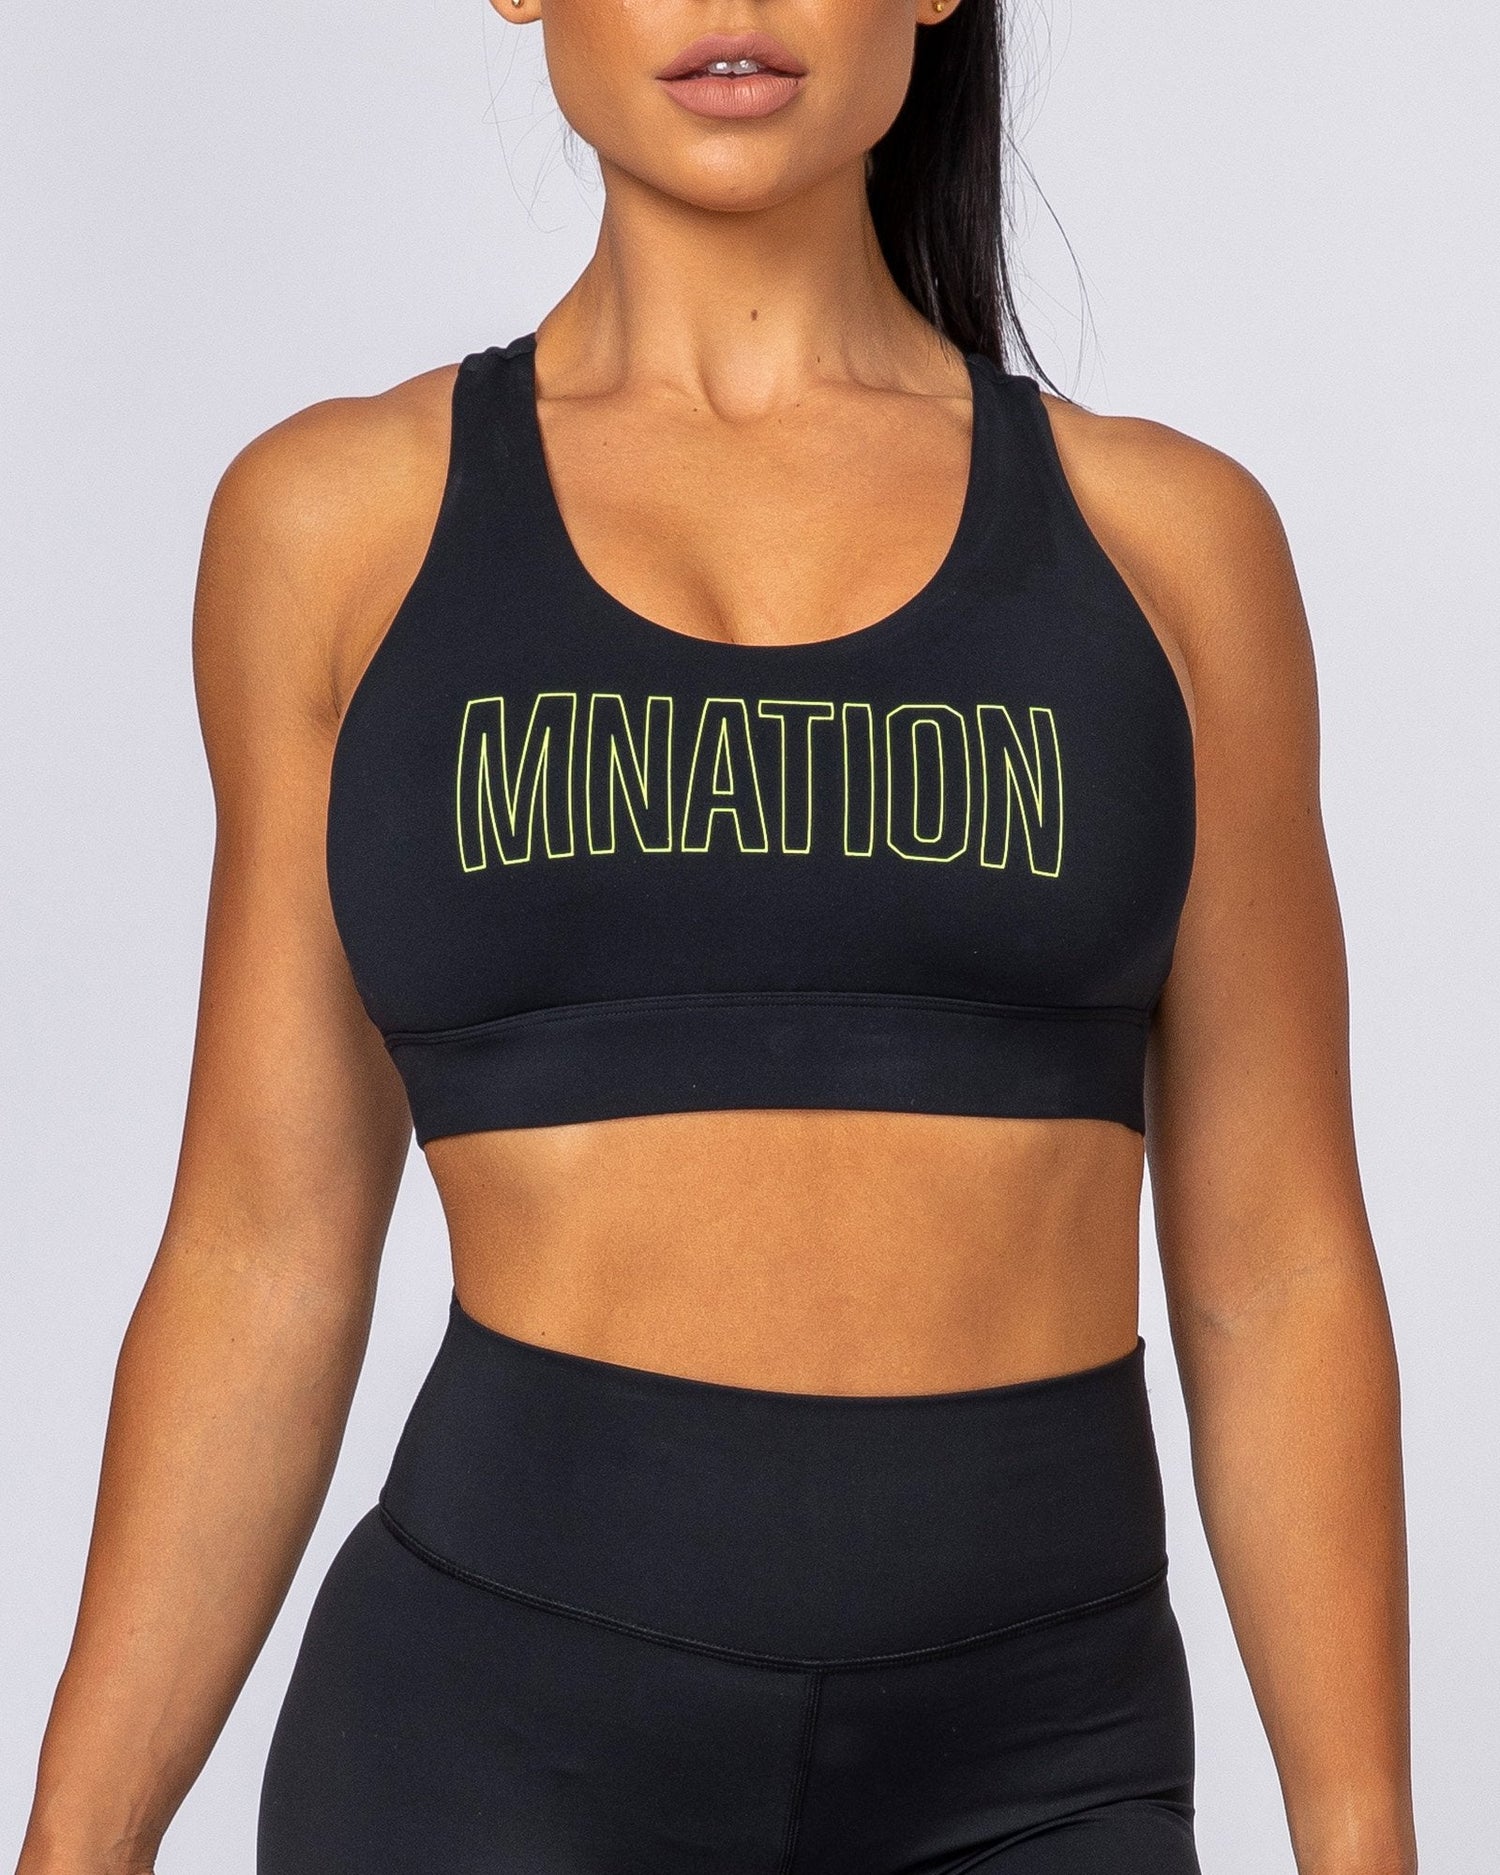 Muscle Nation: Motion Sports Bra, Womens Sports Bras 